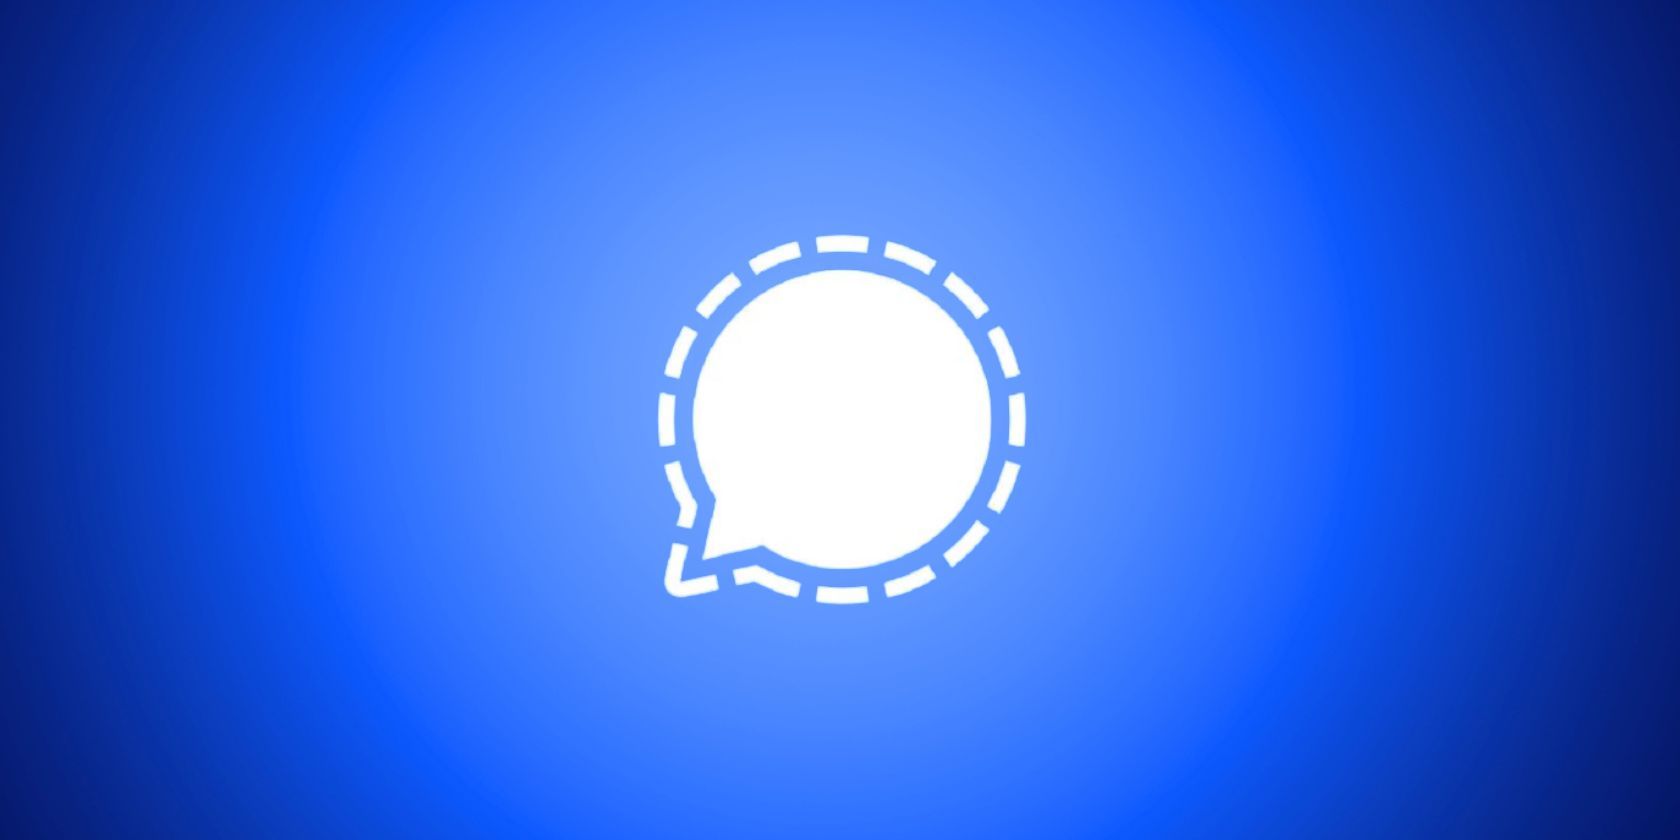 Signal app logo on blue background.